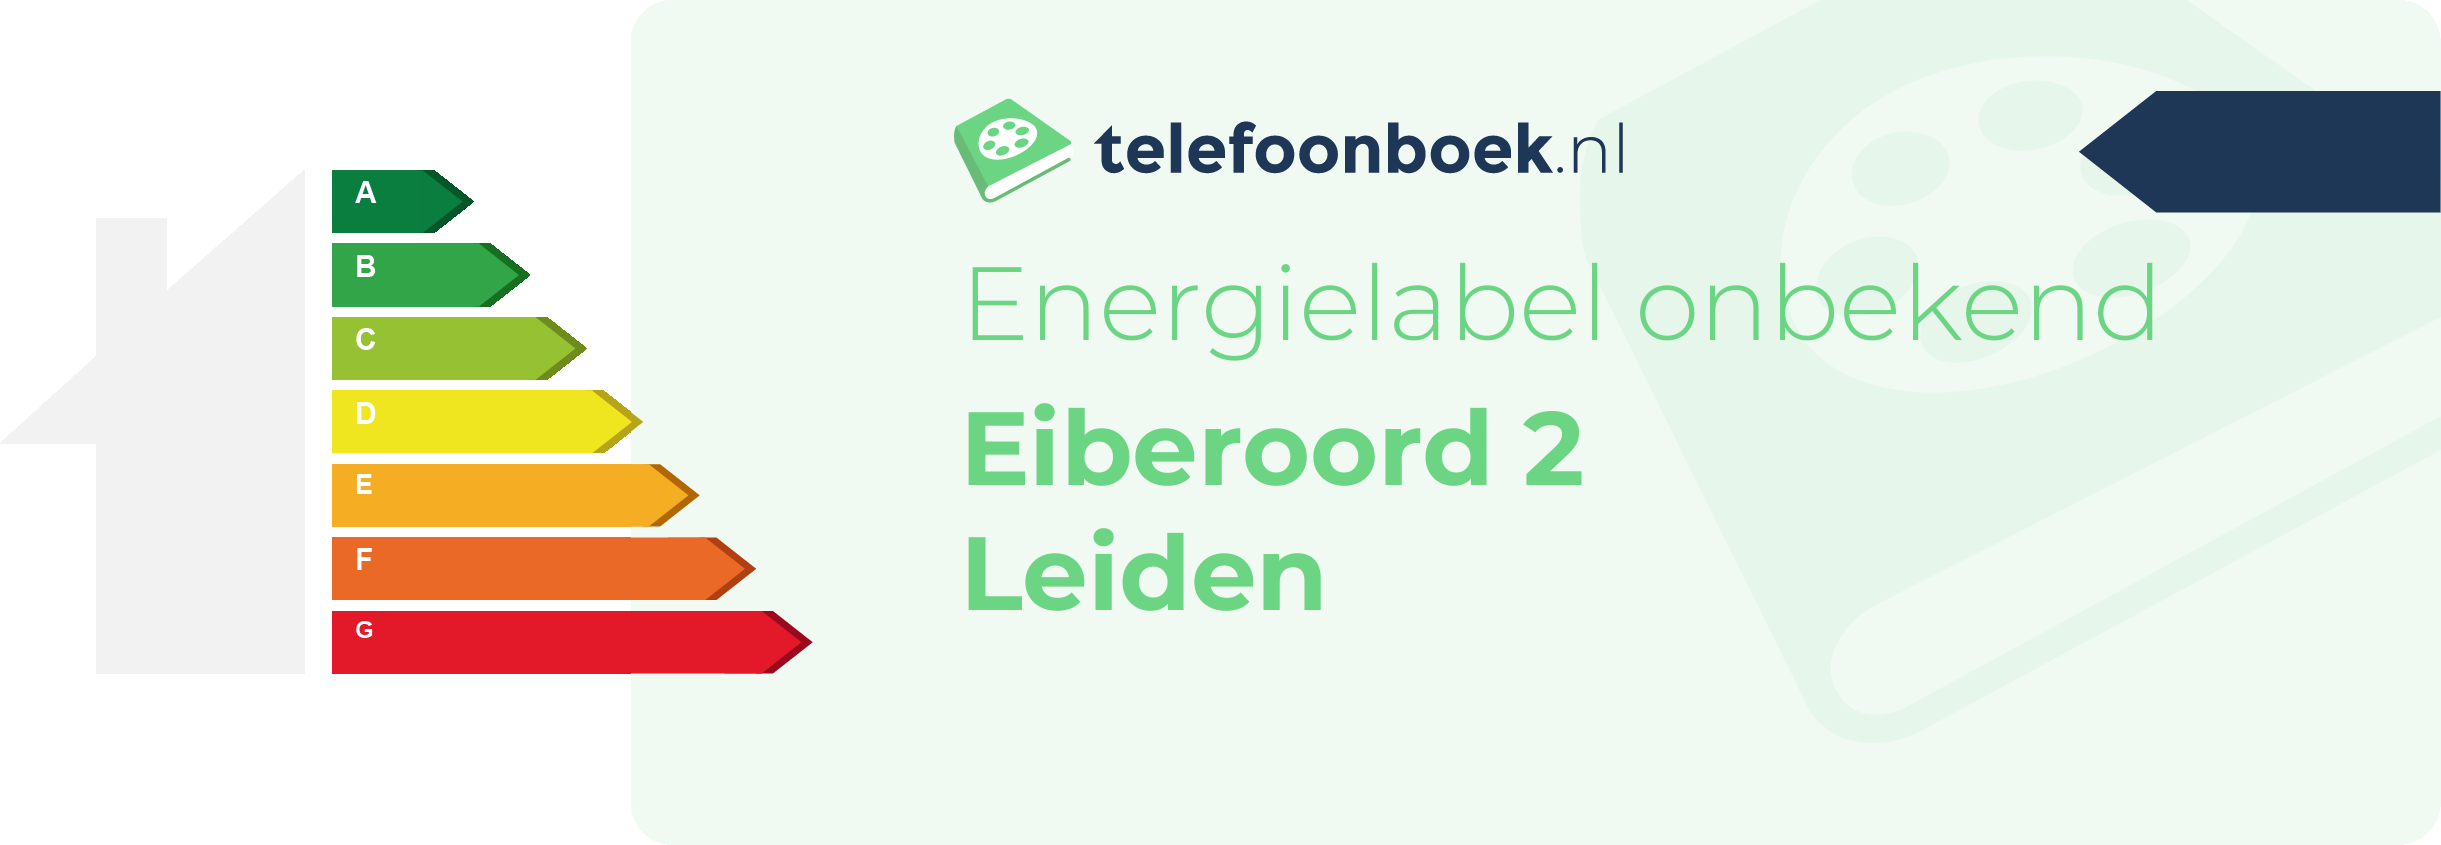 Energielabel Eiberoord 2 Leiden